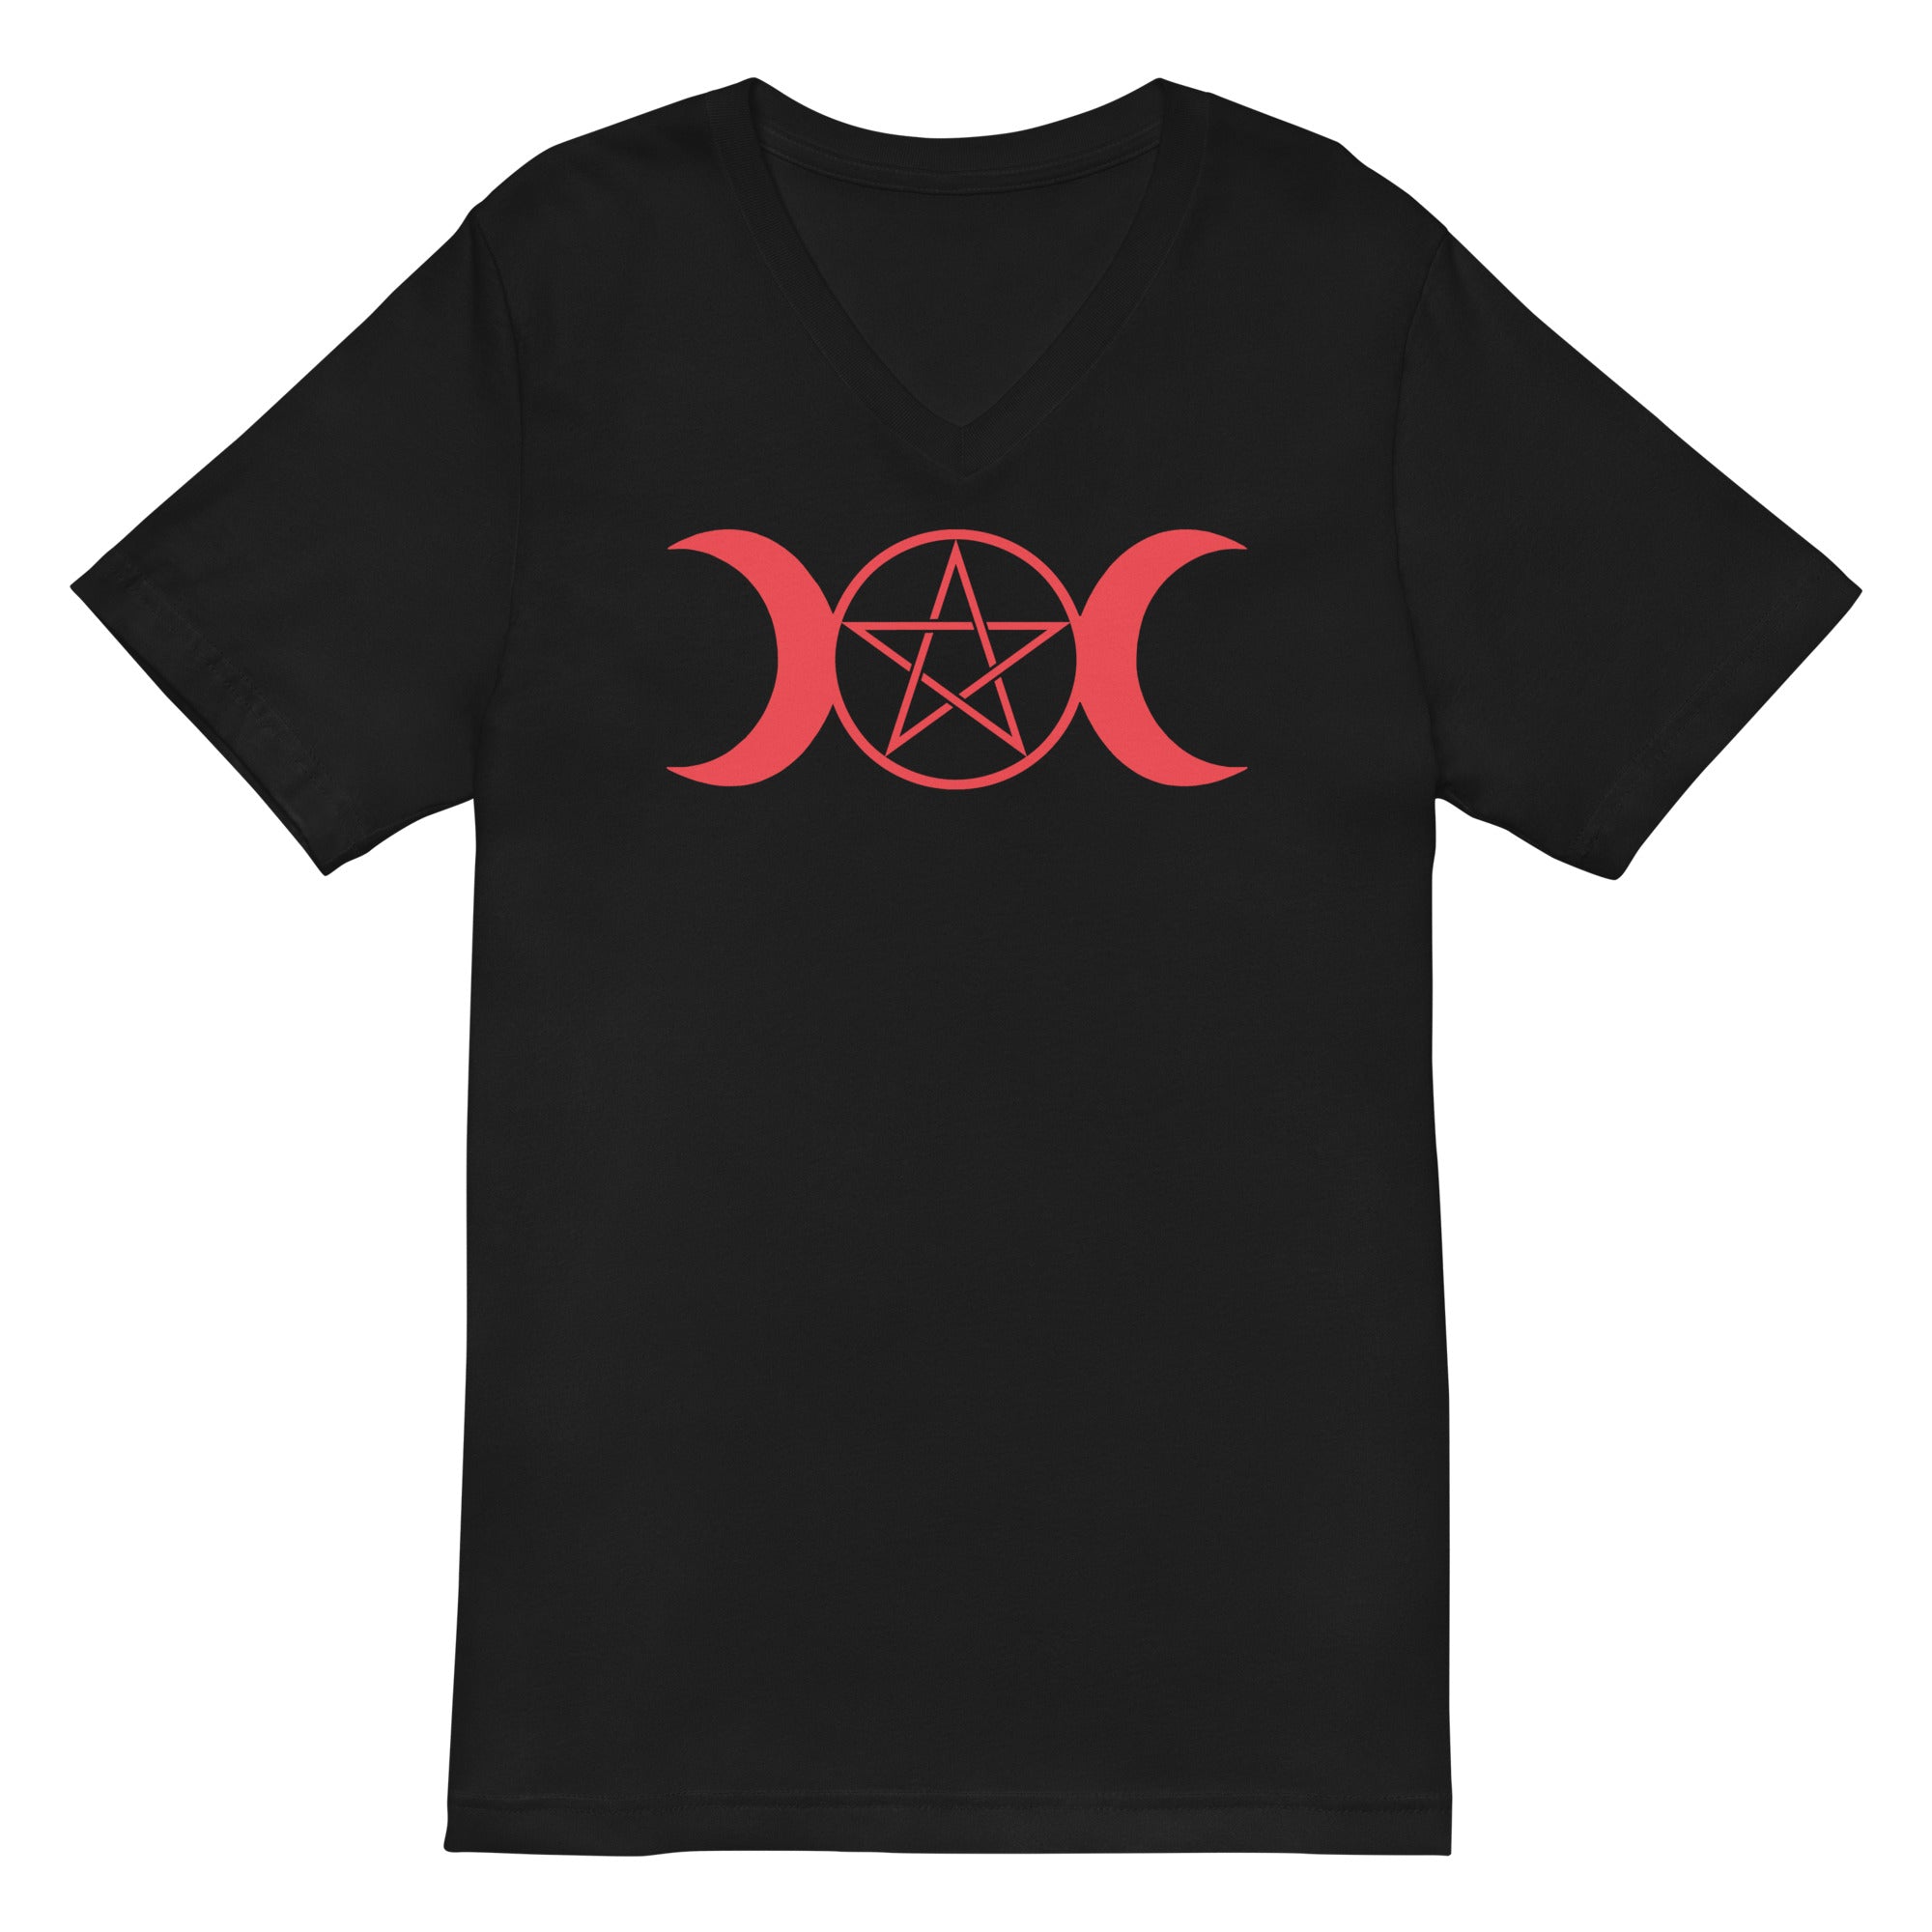 Red Triple Moon Goddess Wiccan Pagan Symbol Women’s Short Sleeve V-Neck T-Shirt